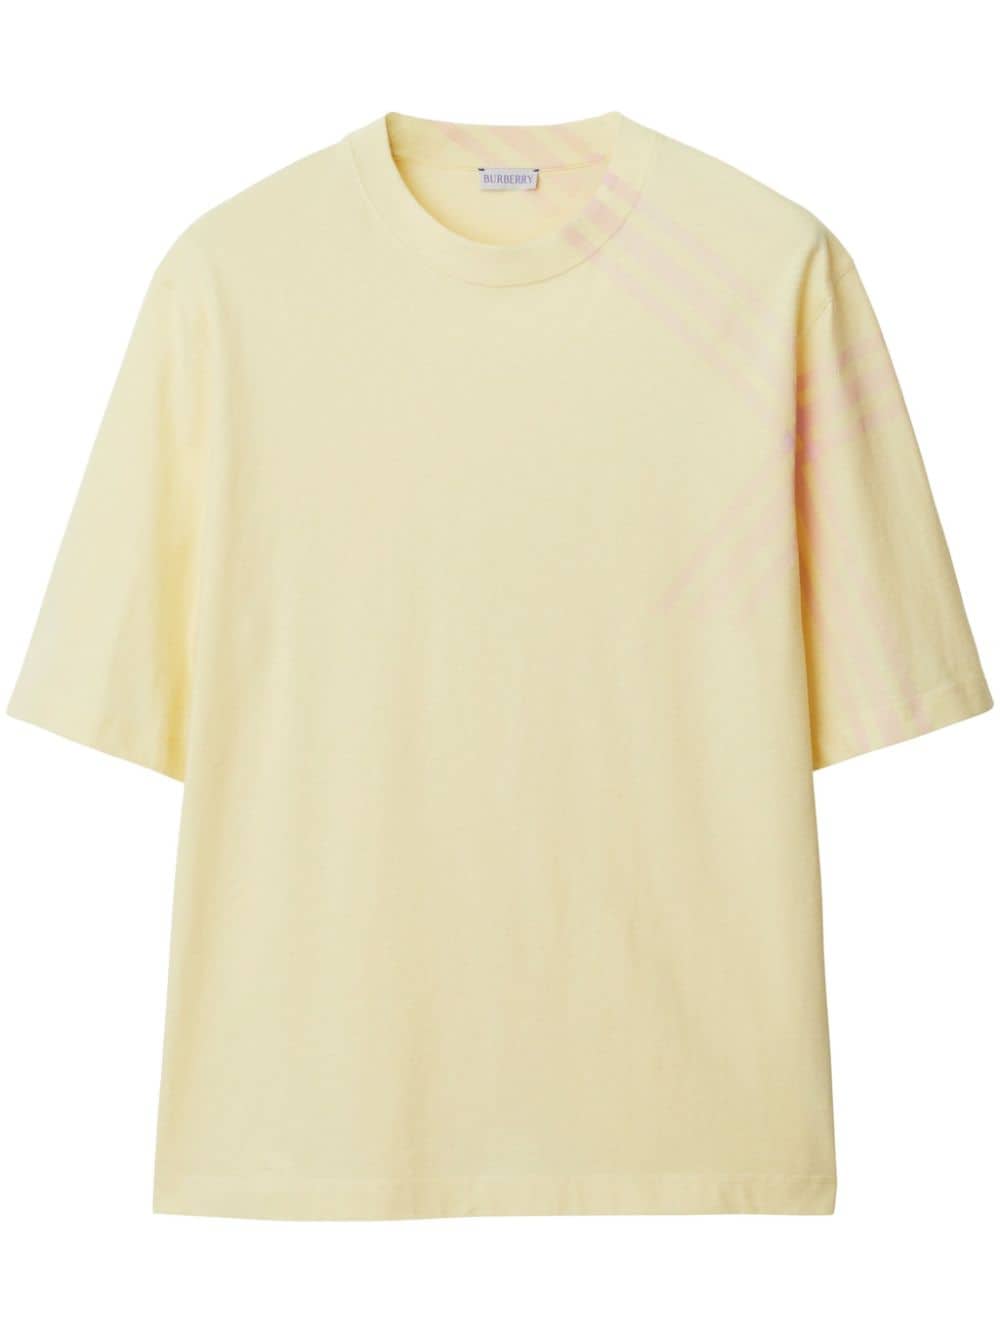 Burberry check-print cotton T-shirt - Yellow